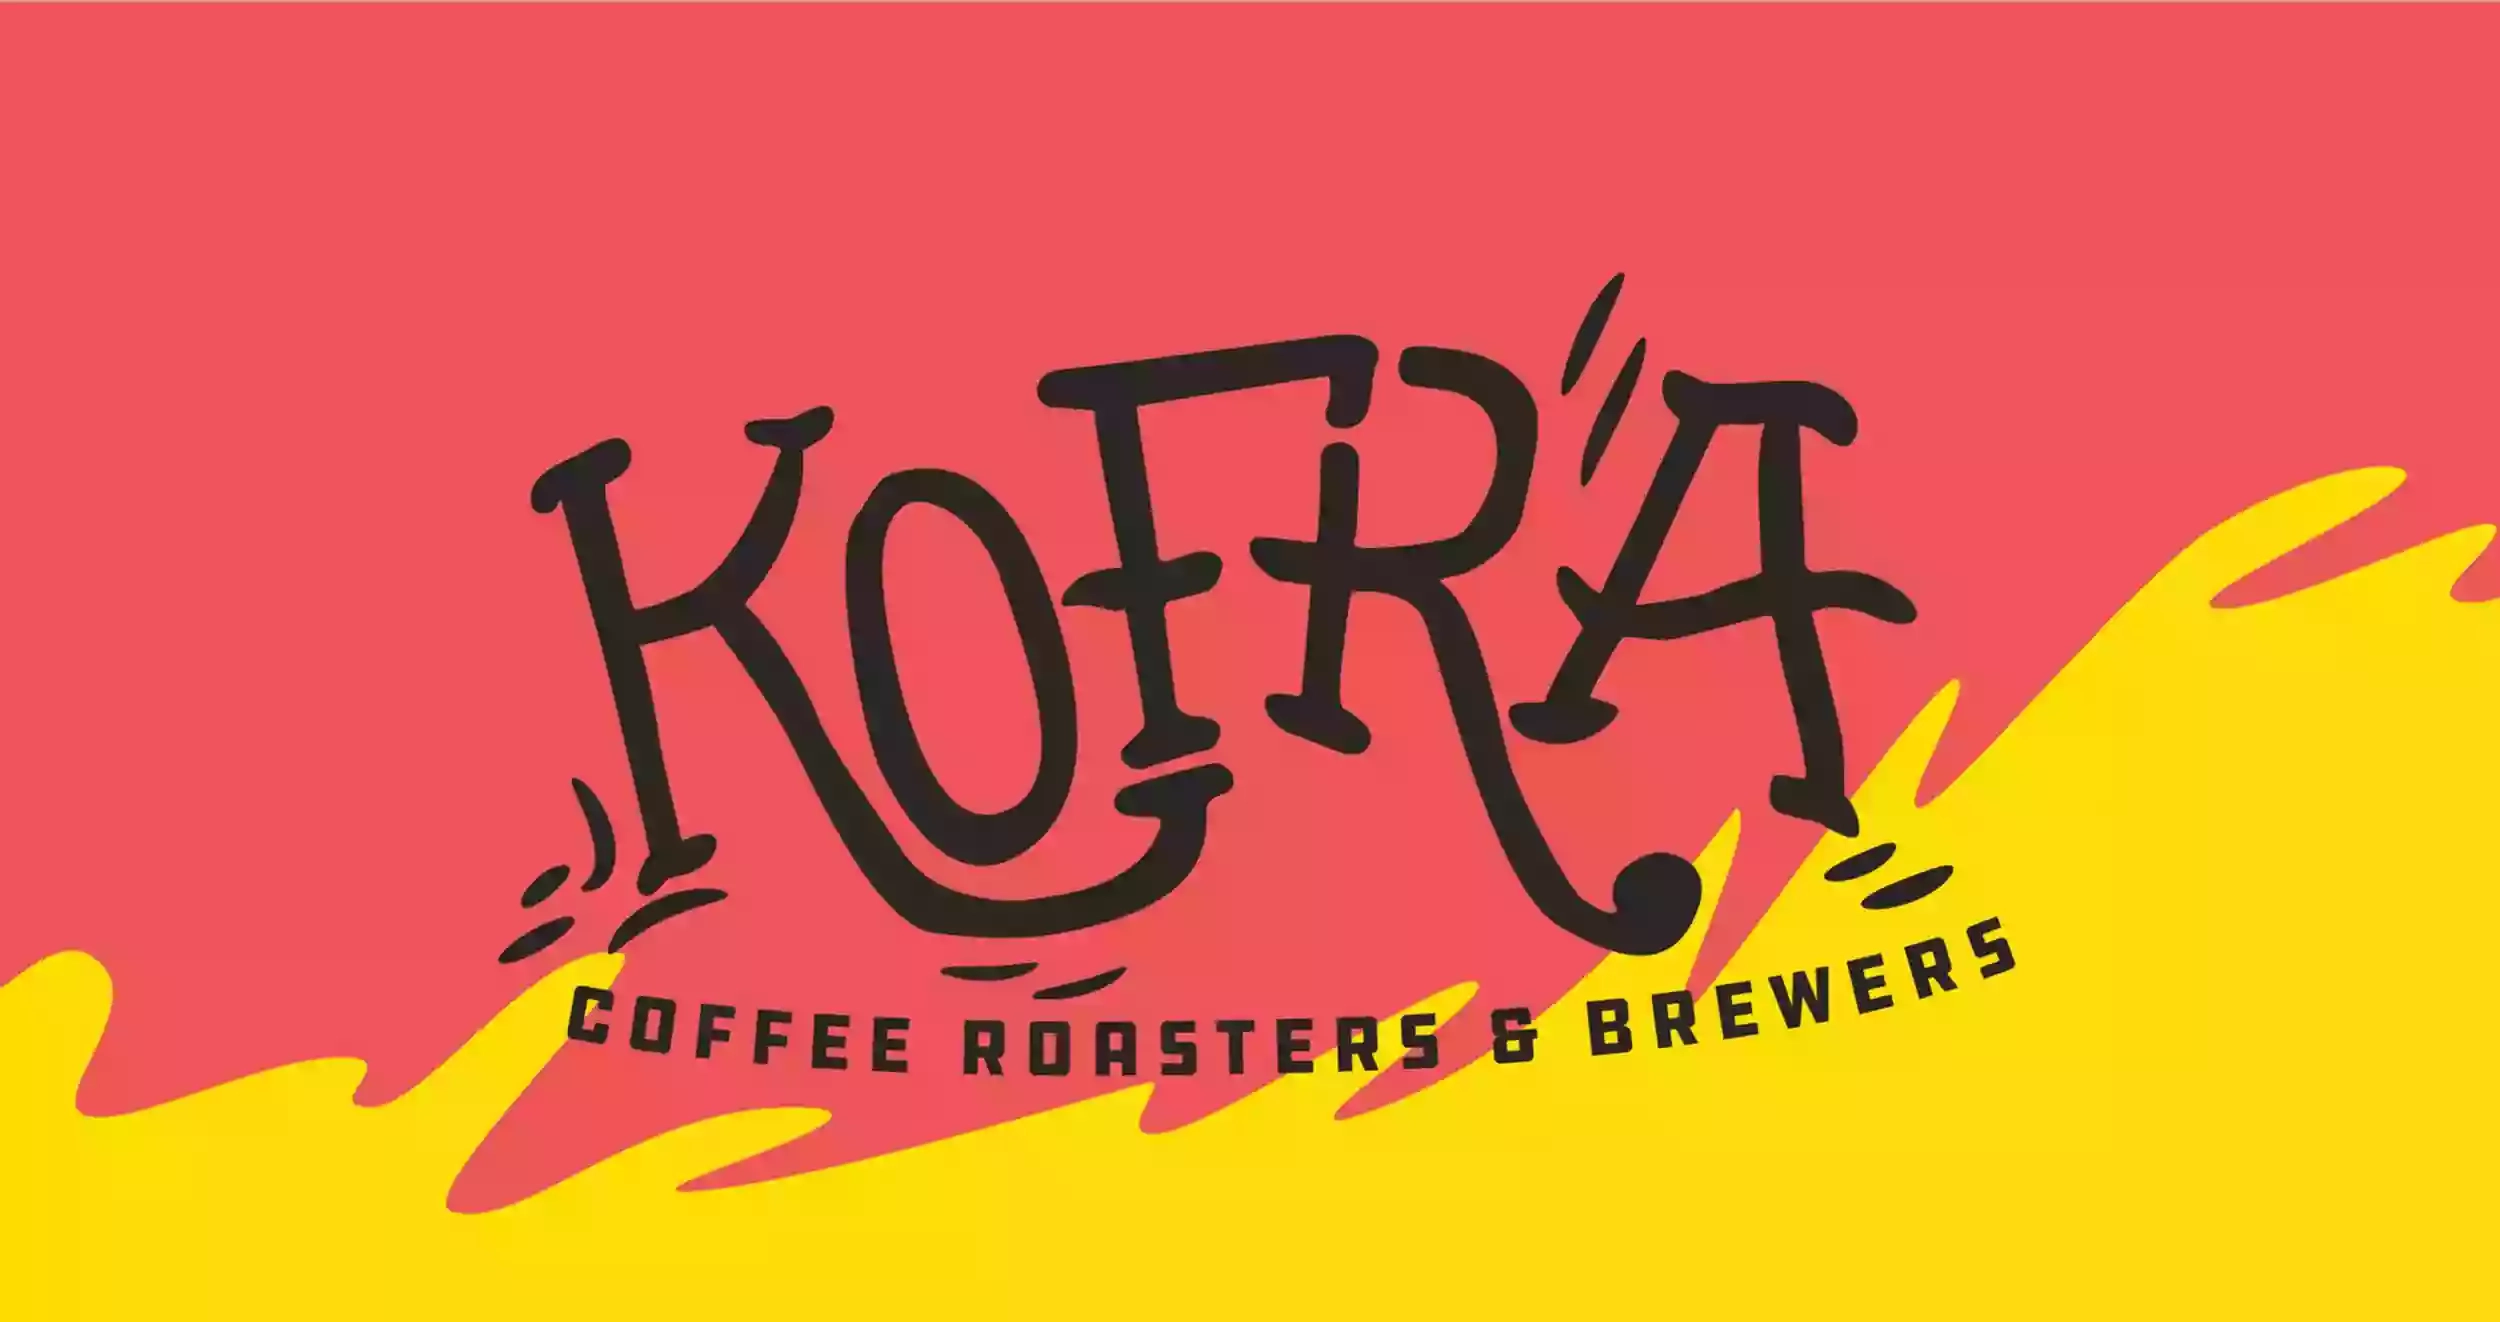 Kofra Coffee Roasters